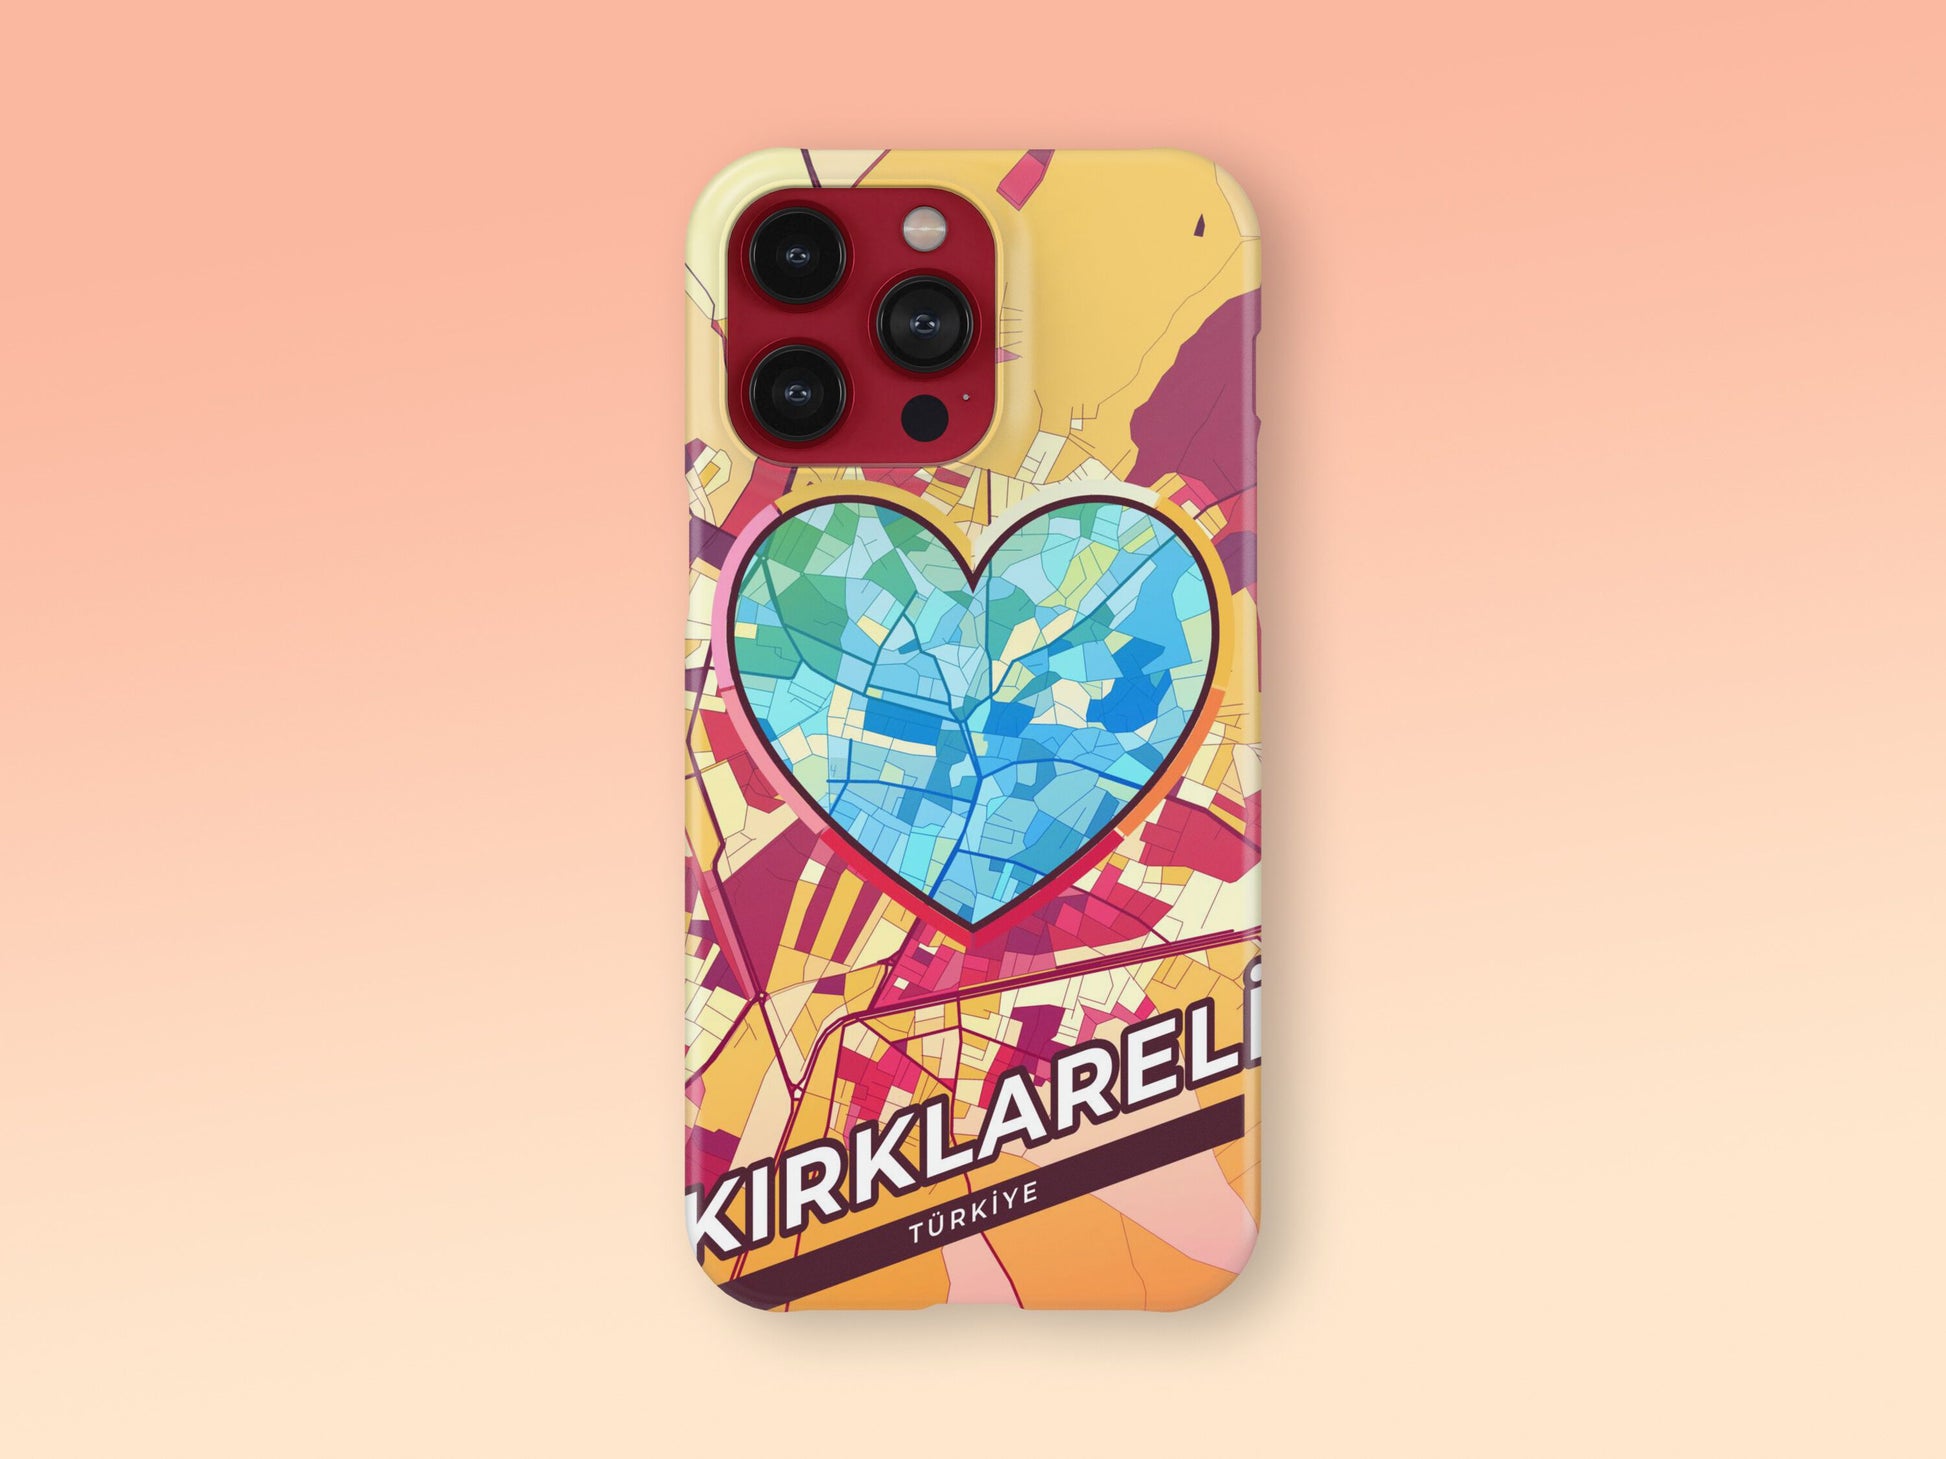 Kırklareli Turkey slim phone case with colorful icon. Birthday, wedding or housewarming gift. Couple match cases. 2